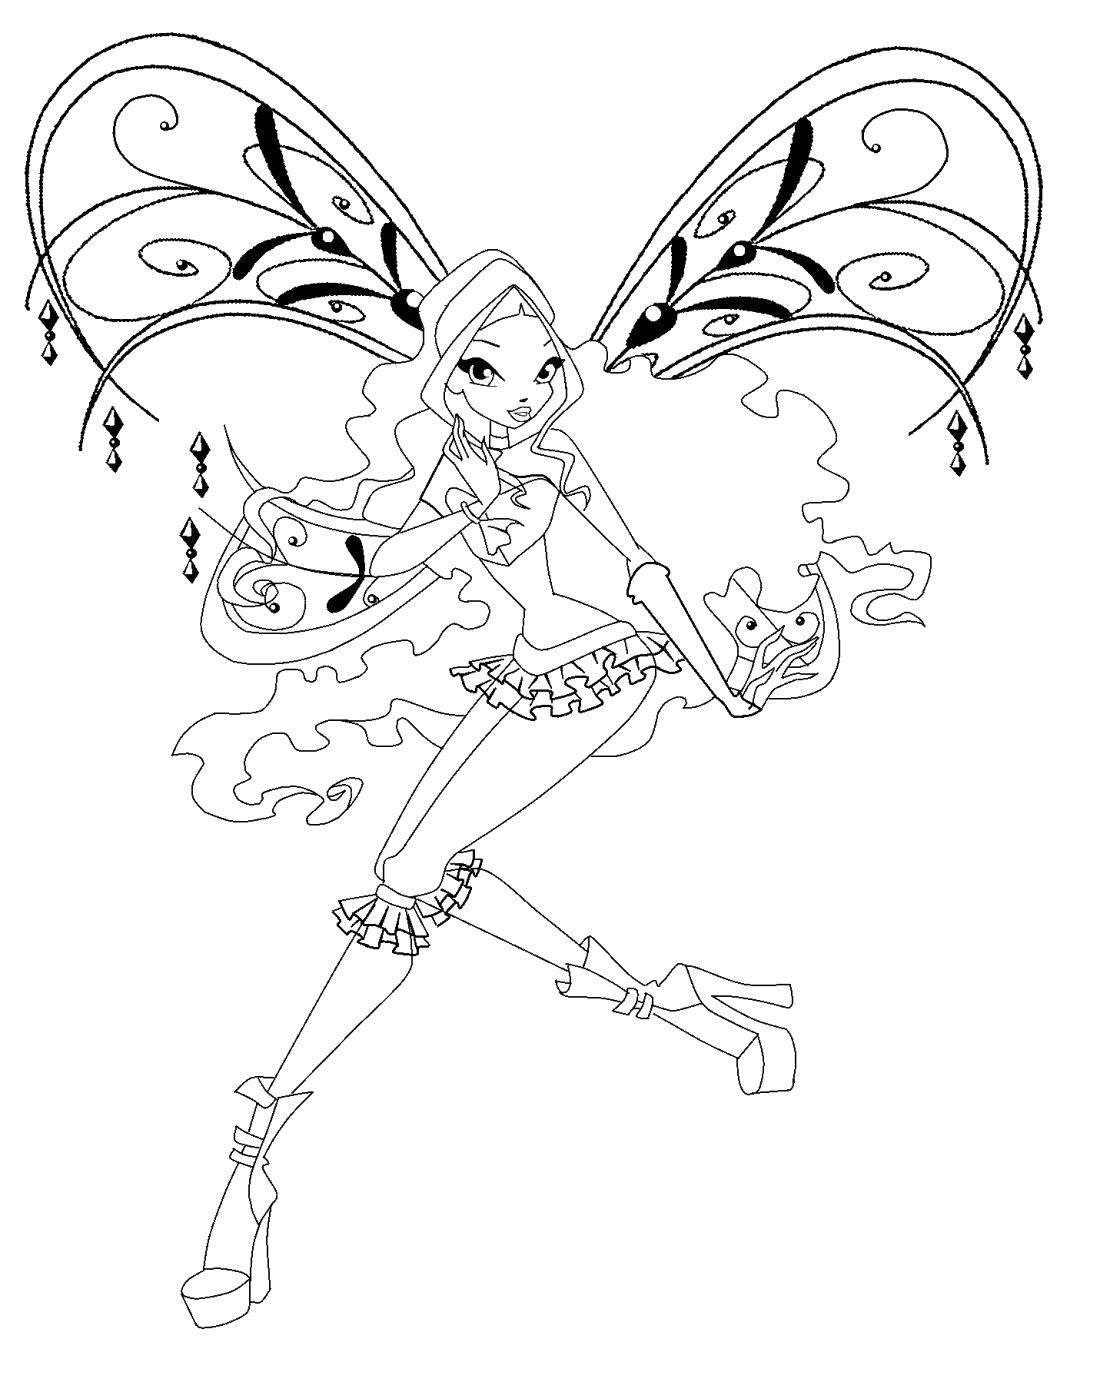 Coloring Leila fairy. Category fairies. Tags:  Fairy, forest, fairy tale.